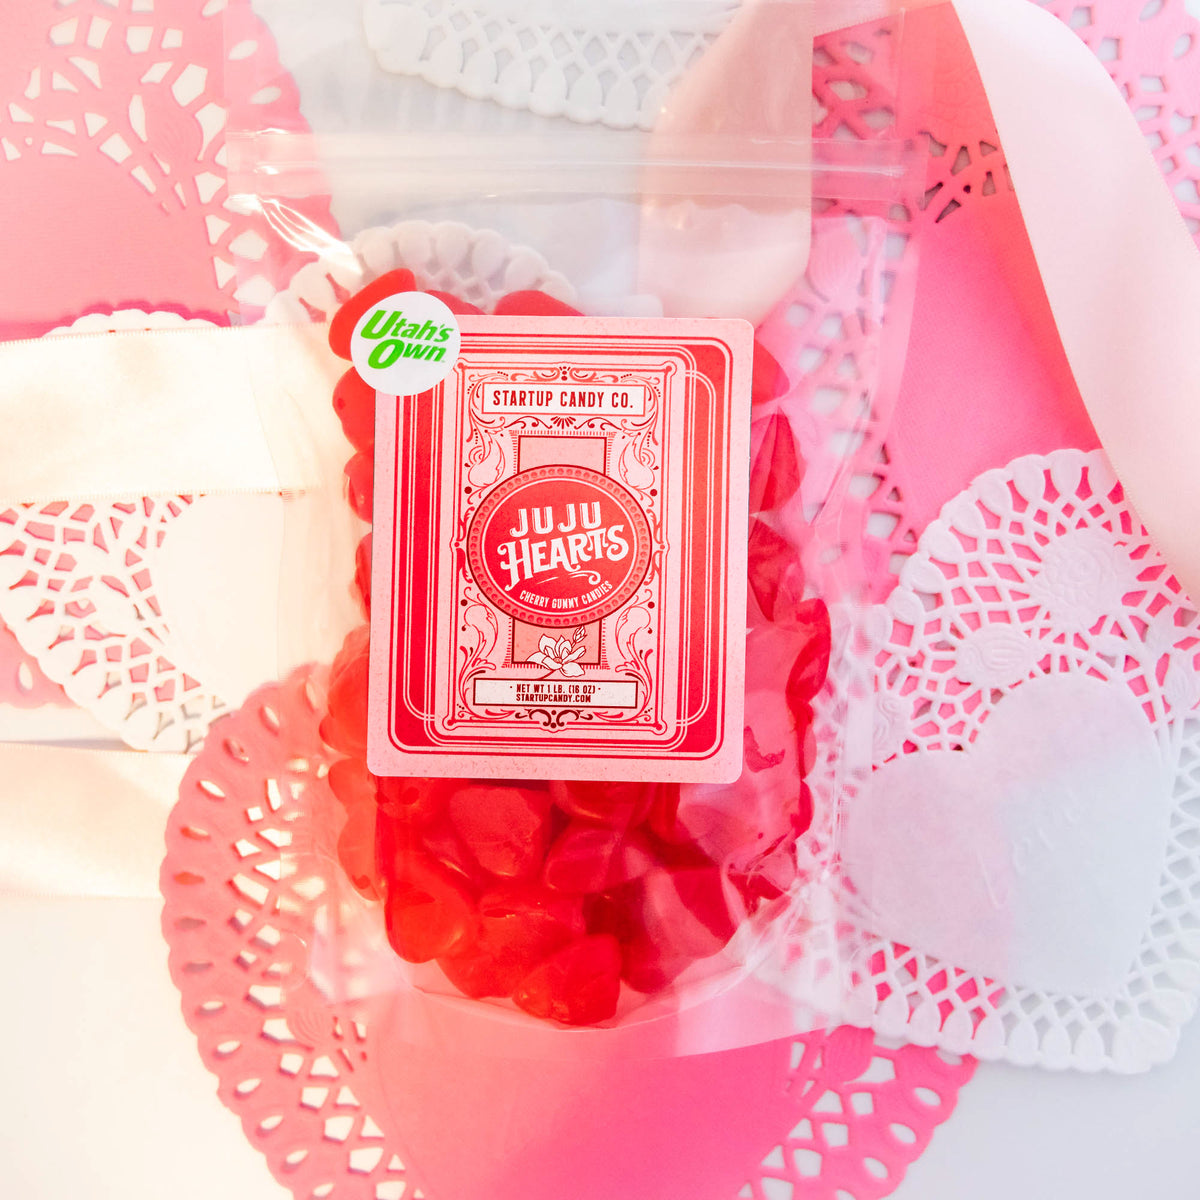 Cherry Juju Hearts – Startup Candy Co.